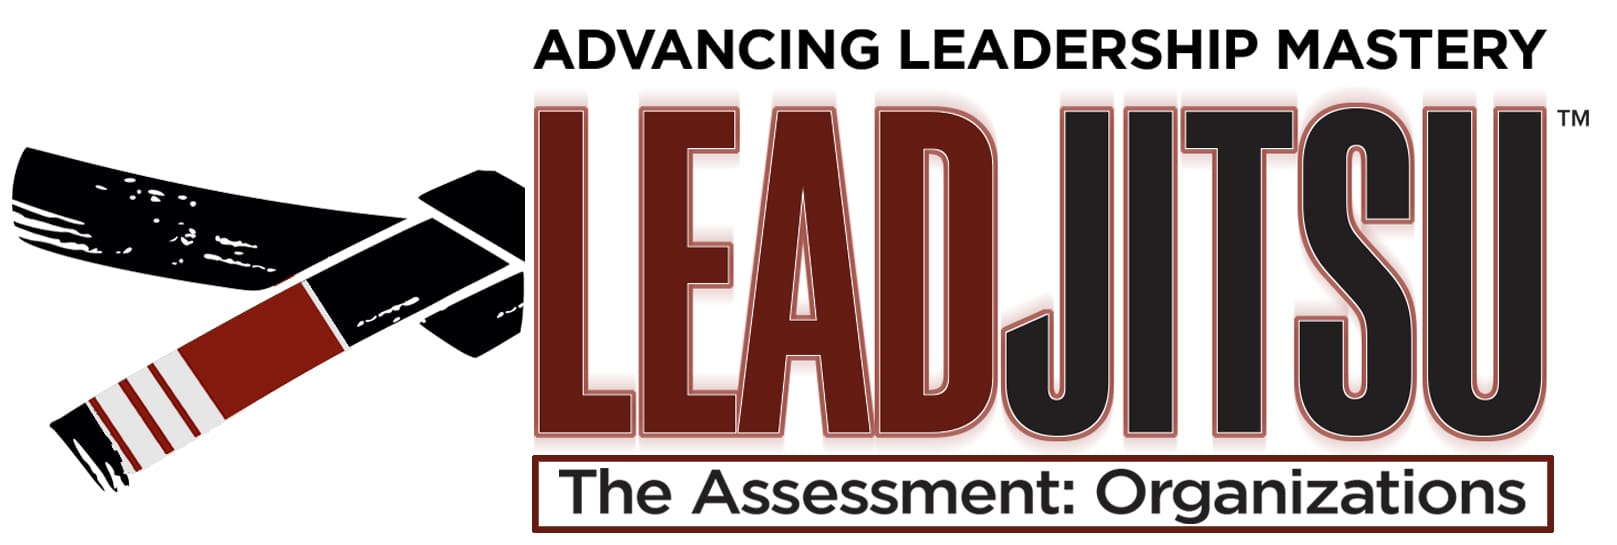 LEADJITSU The Assessment for Organizations